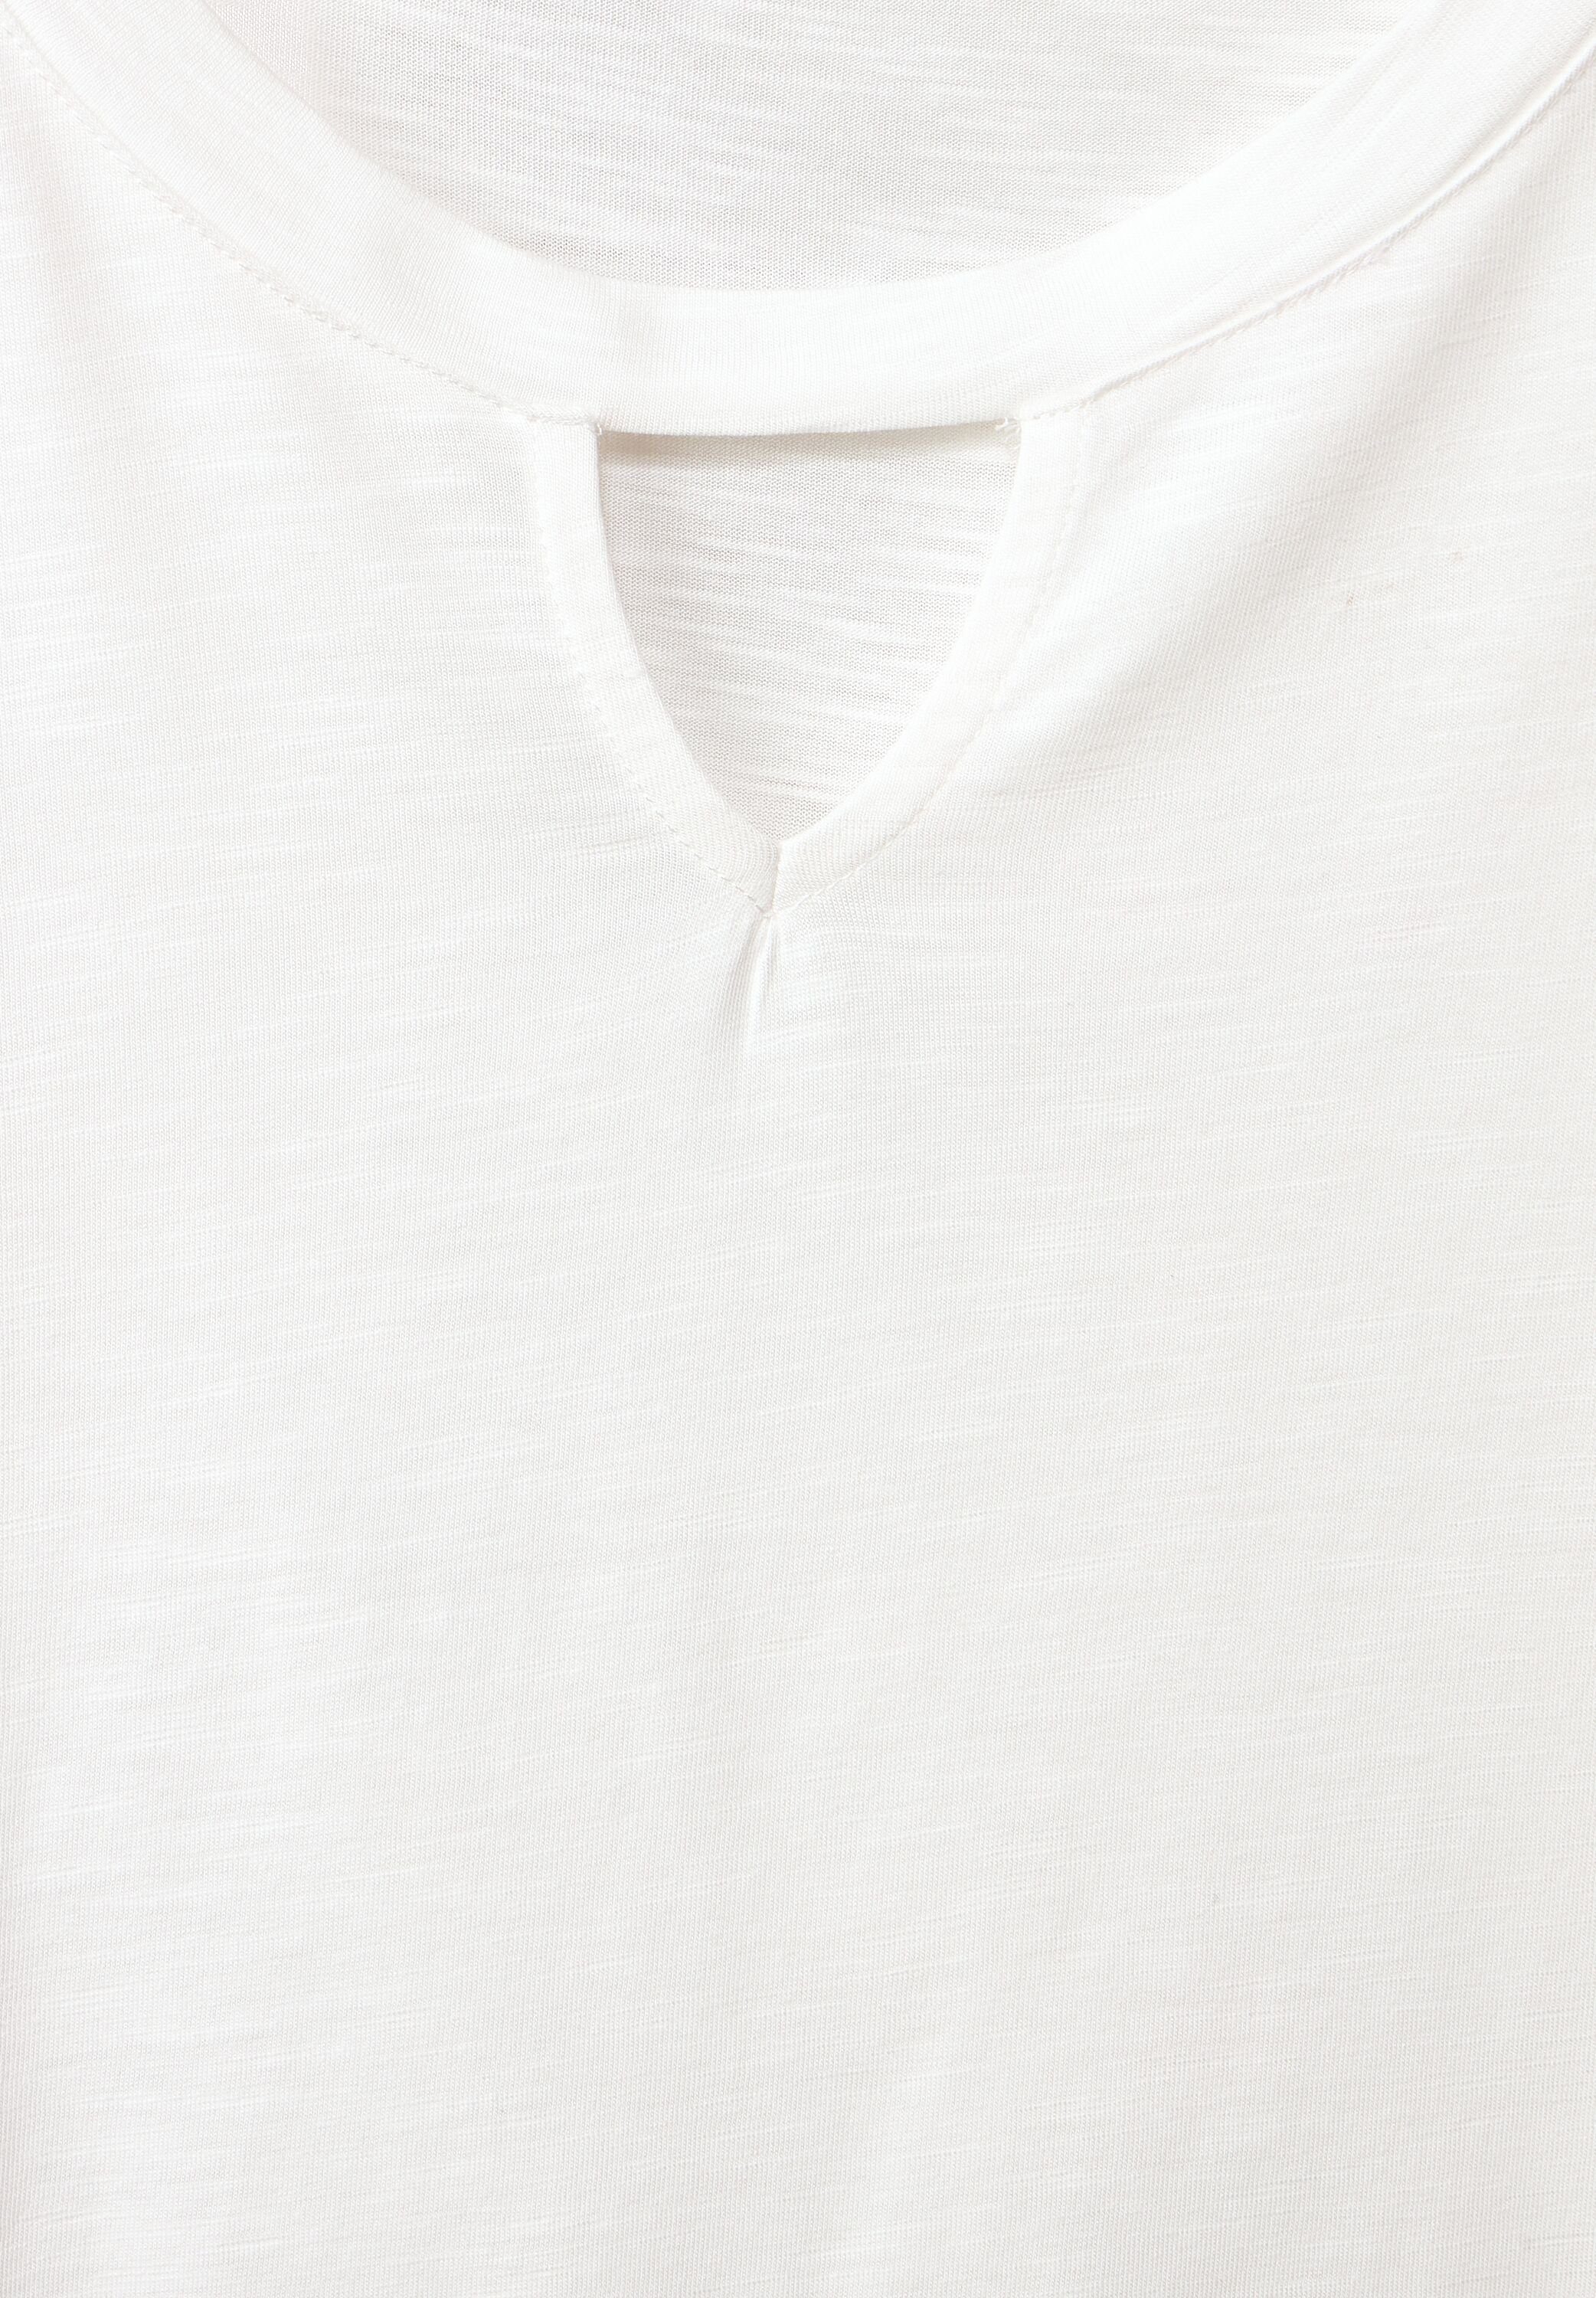 softem aus white Materialmix T-Shirt vanilla Cecil